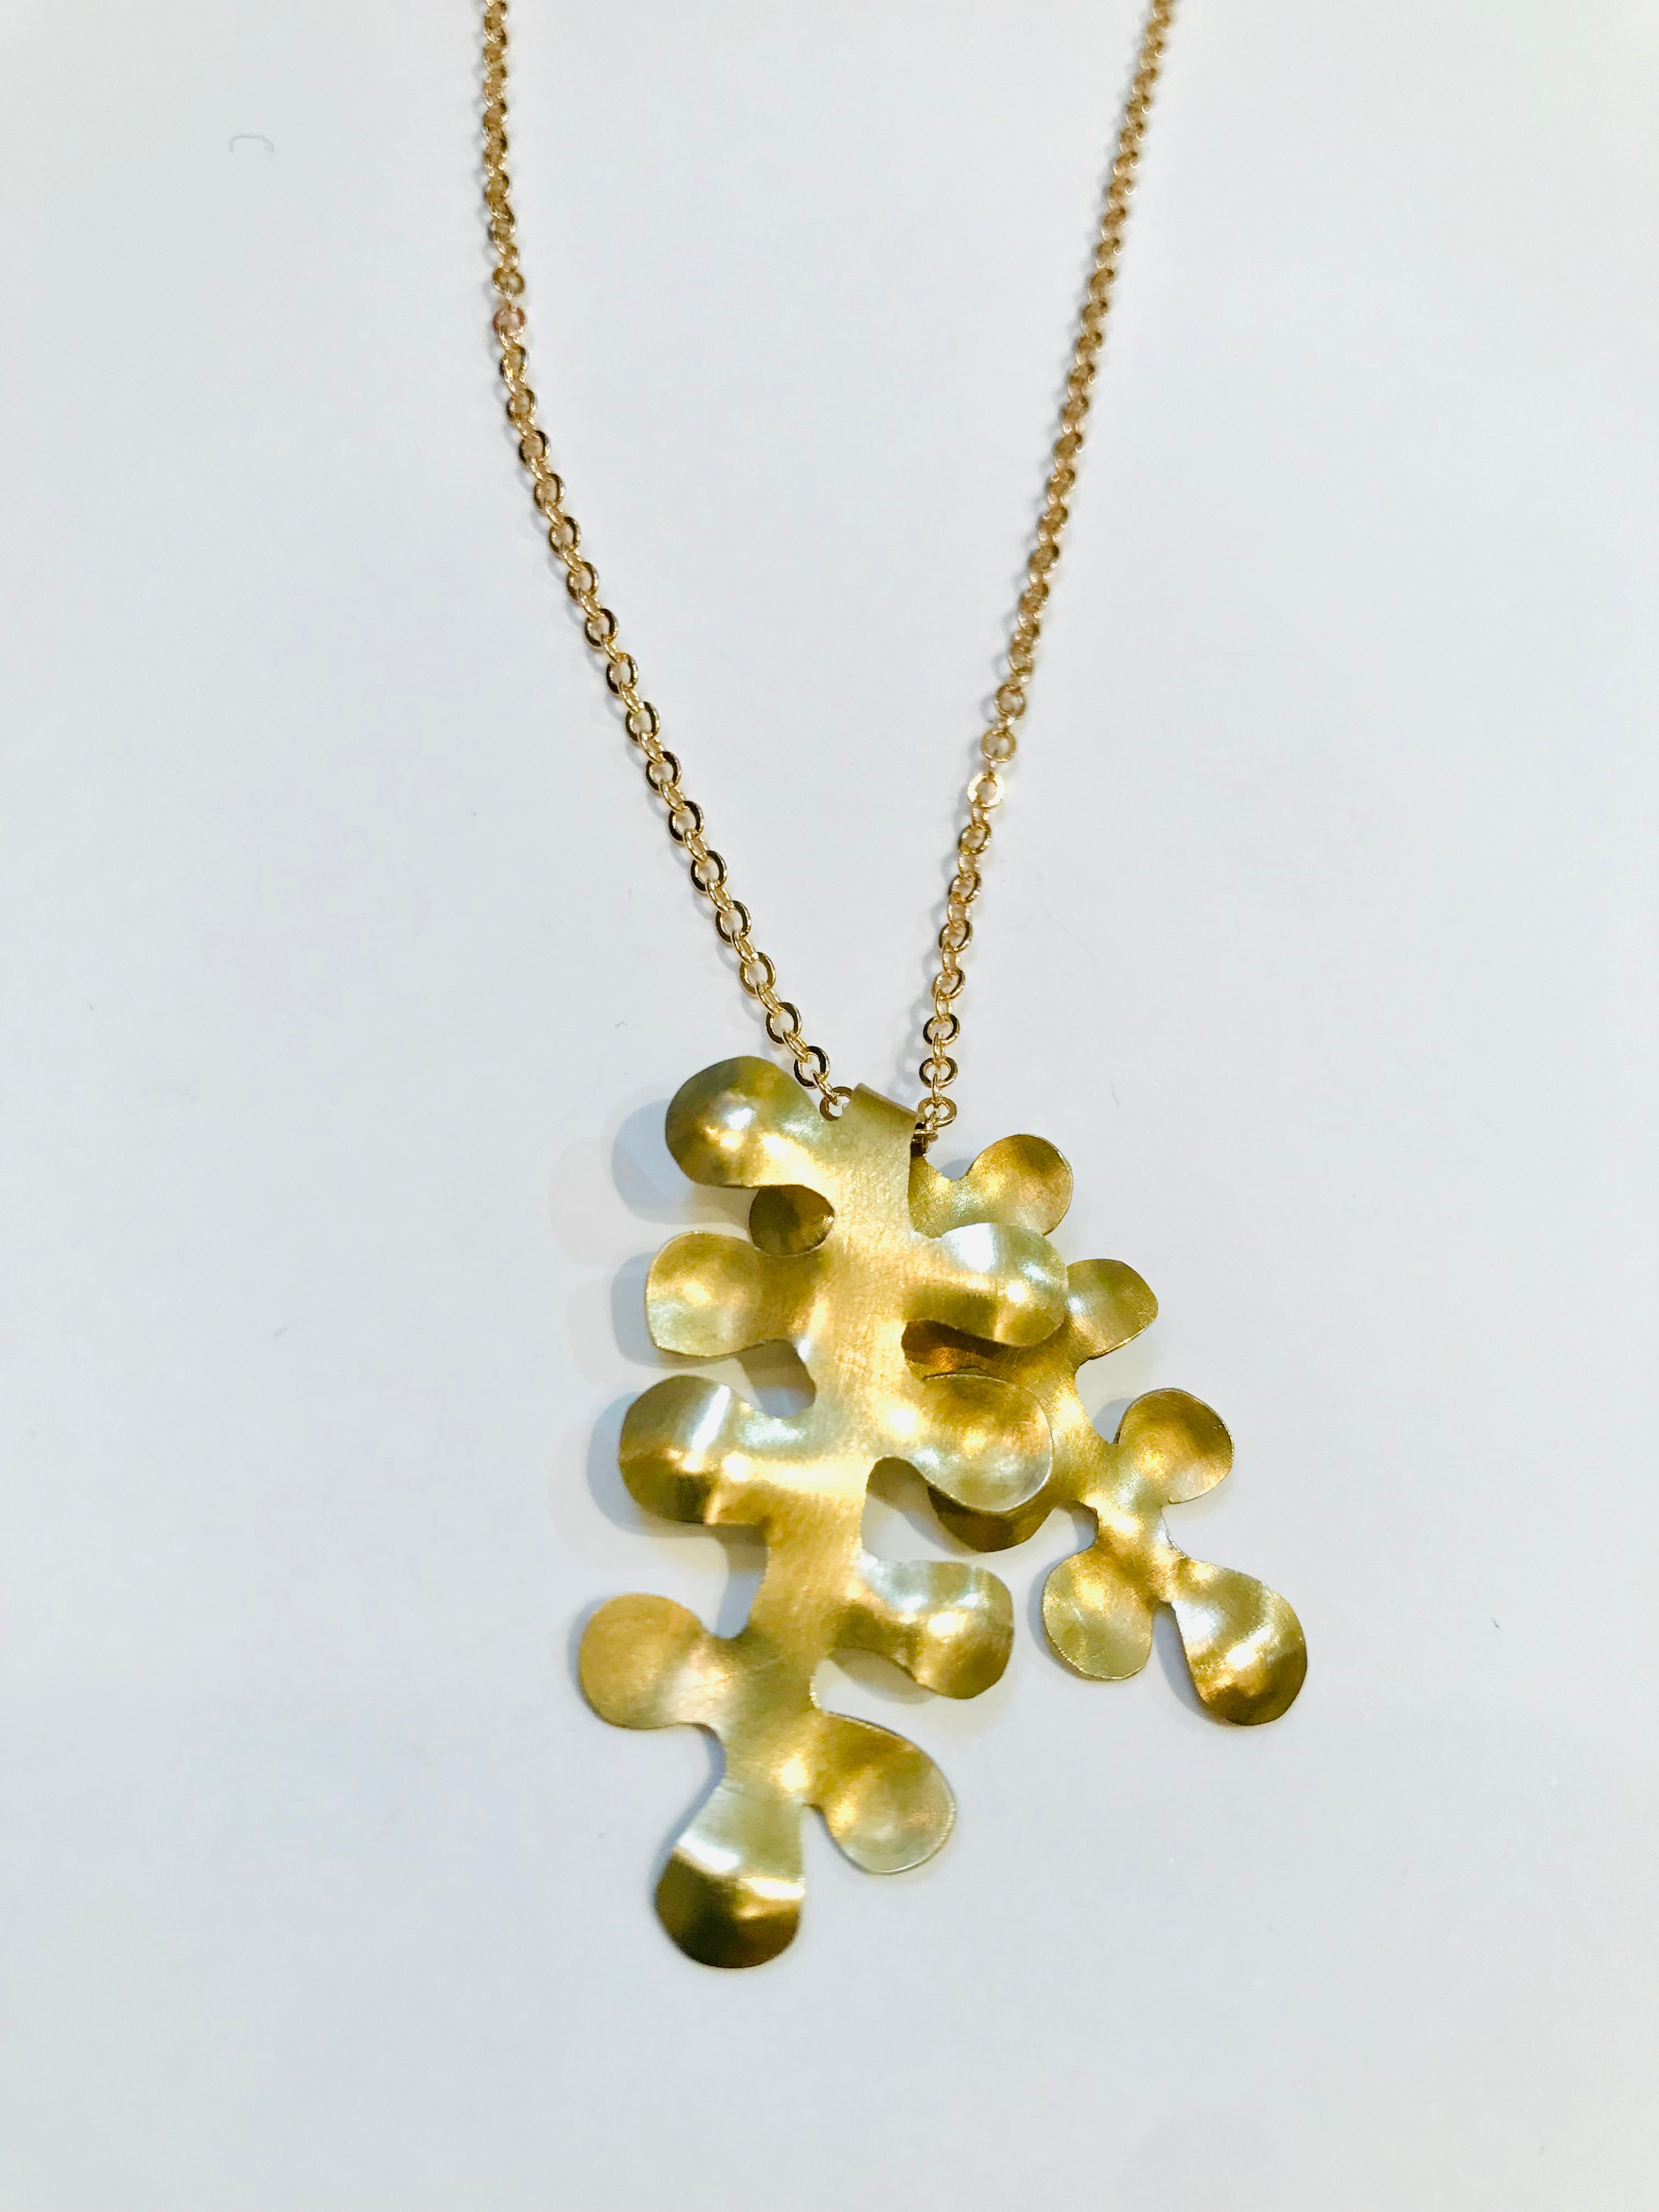 Seaweed Bubble Pendant - The Nancy Smillie Shop - Art, Jewellery & Designer Gifts Glasgow